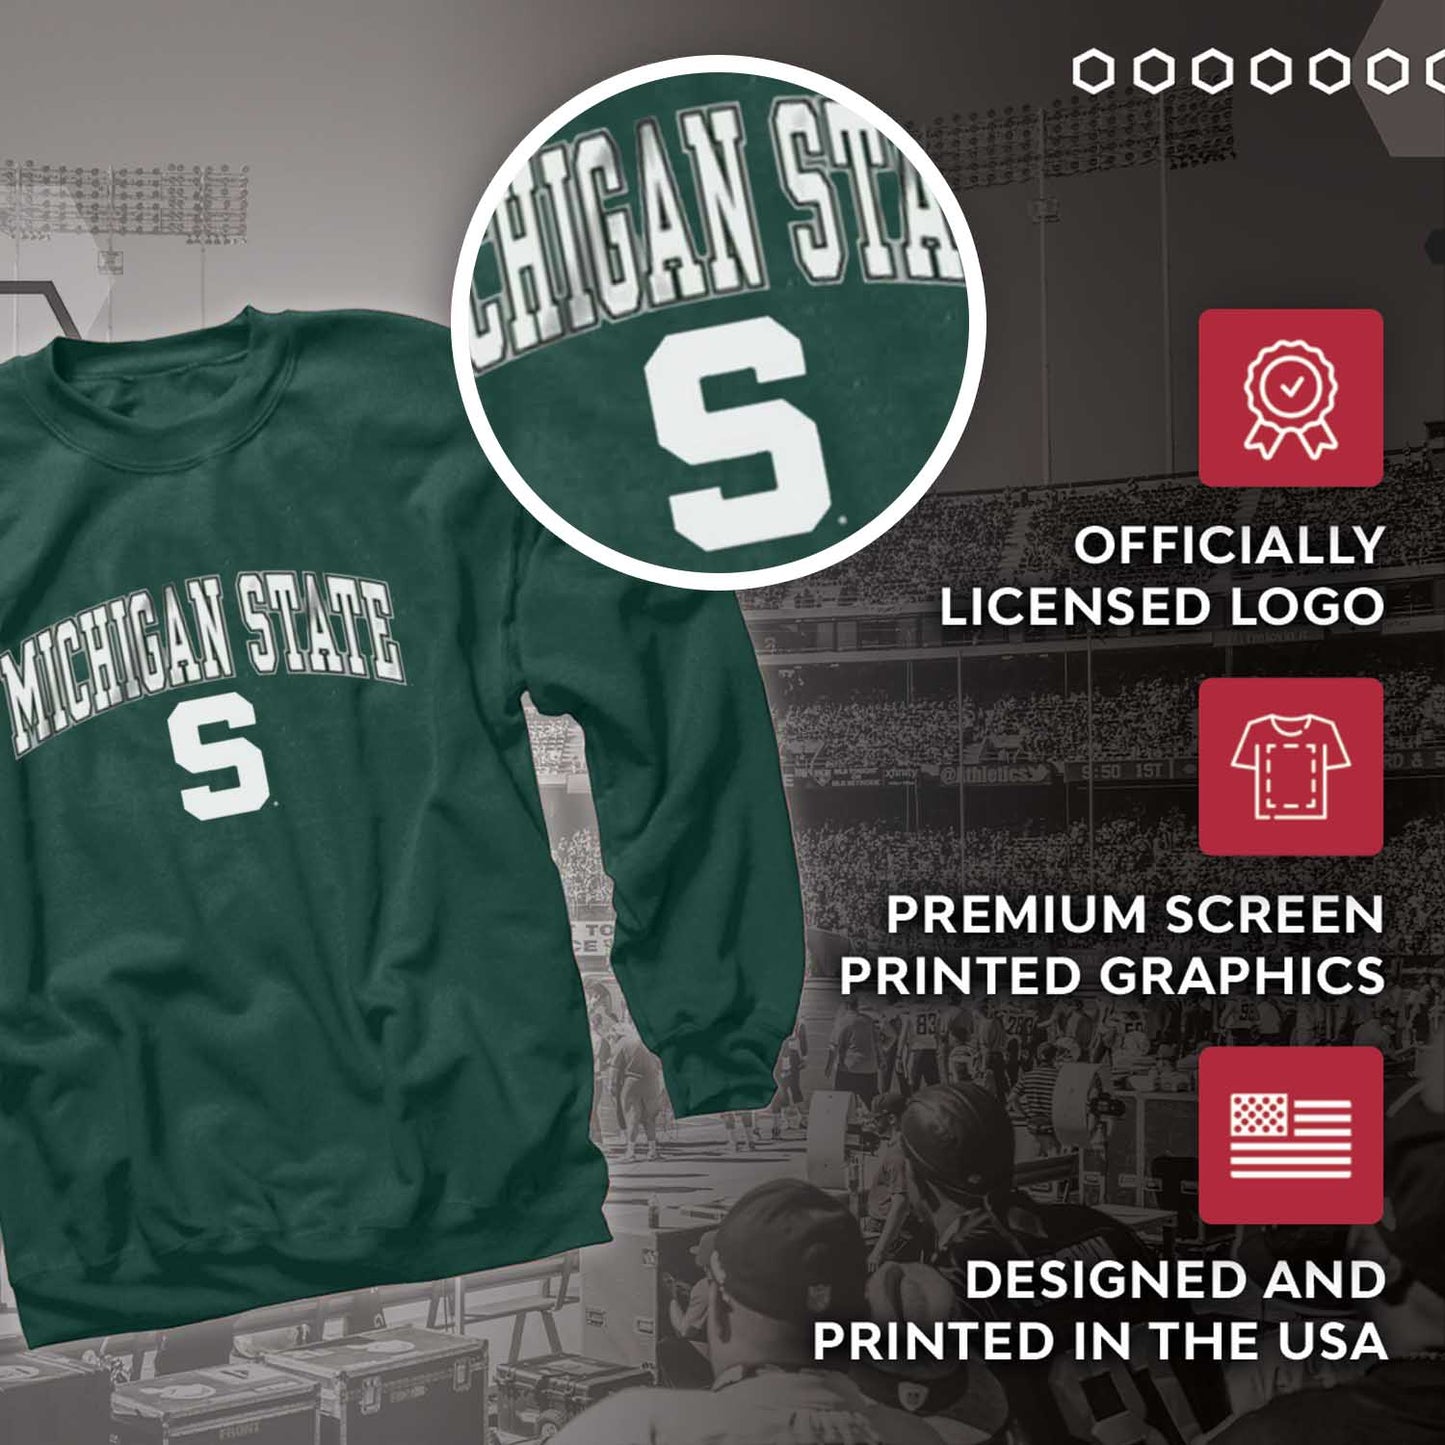 Michigan State Spartans Adult Arch & Logo Soft Style Gameday Crewneck Sweatshirt - Green